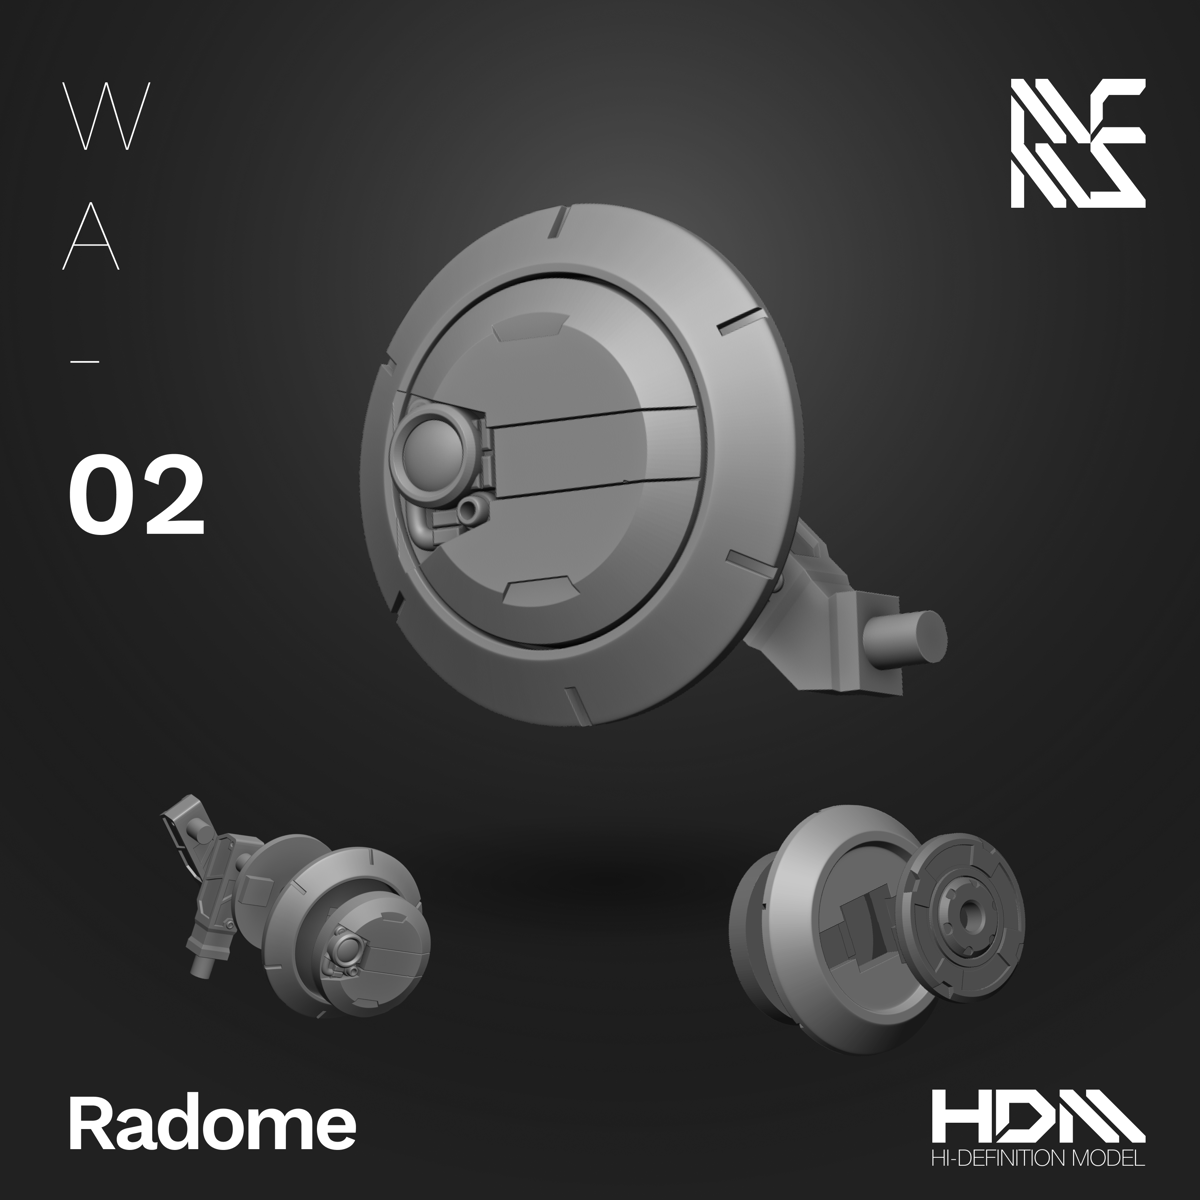 Image of HDM Radome [WA-02]